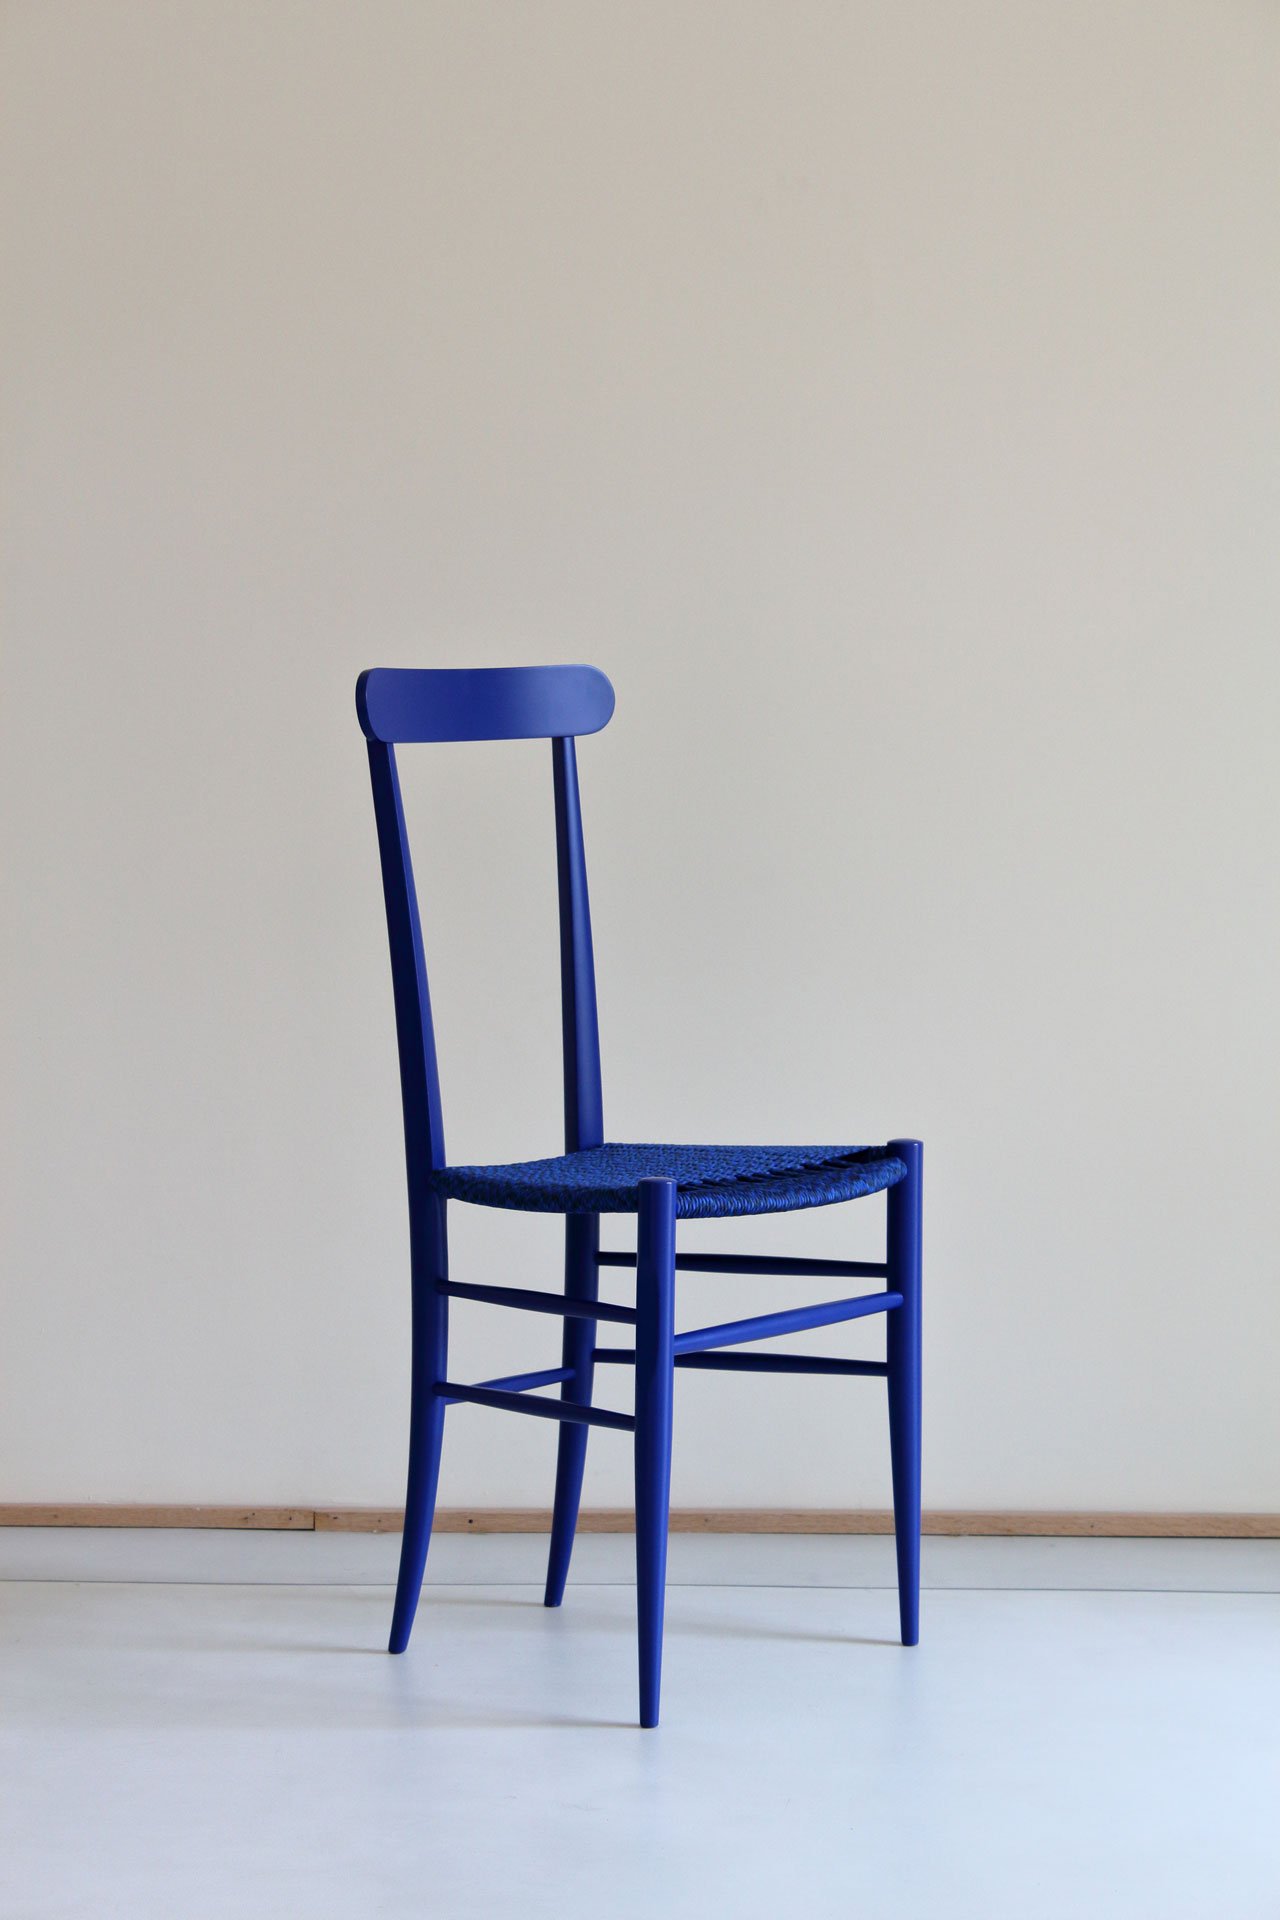 Solferino chair designed under Domenico Rocca’s artistic direction for Eligo. A reinterpretation of the company’s Chiavarina wooden chair.